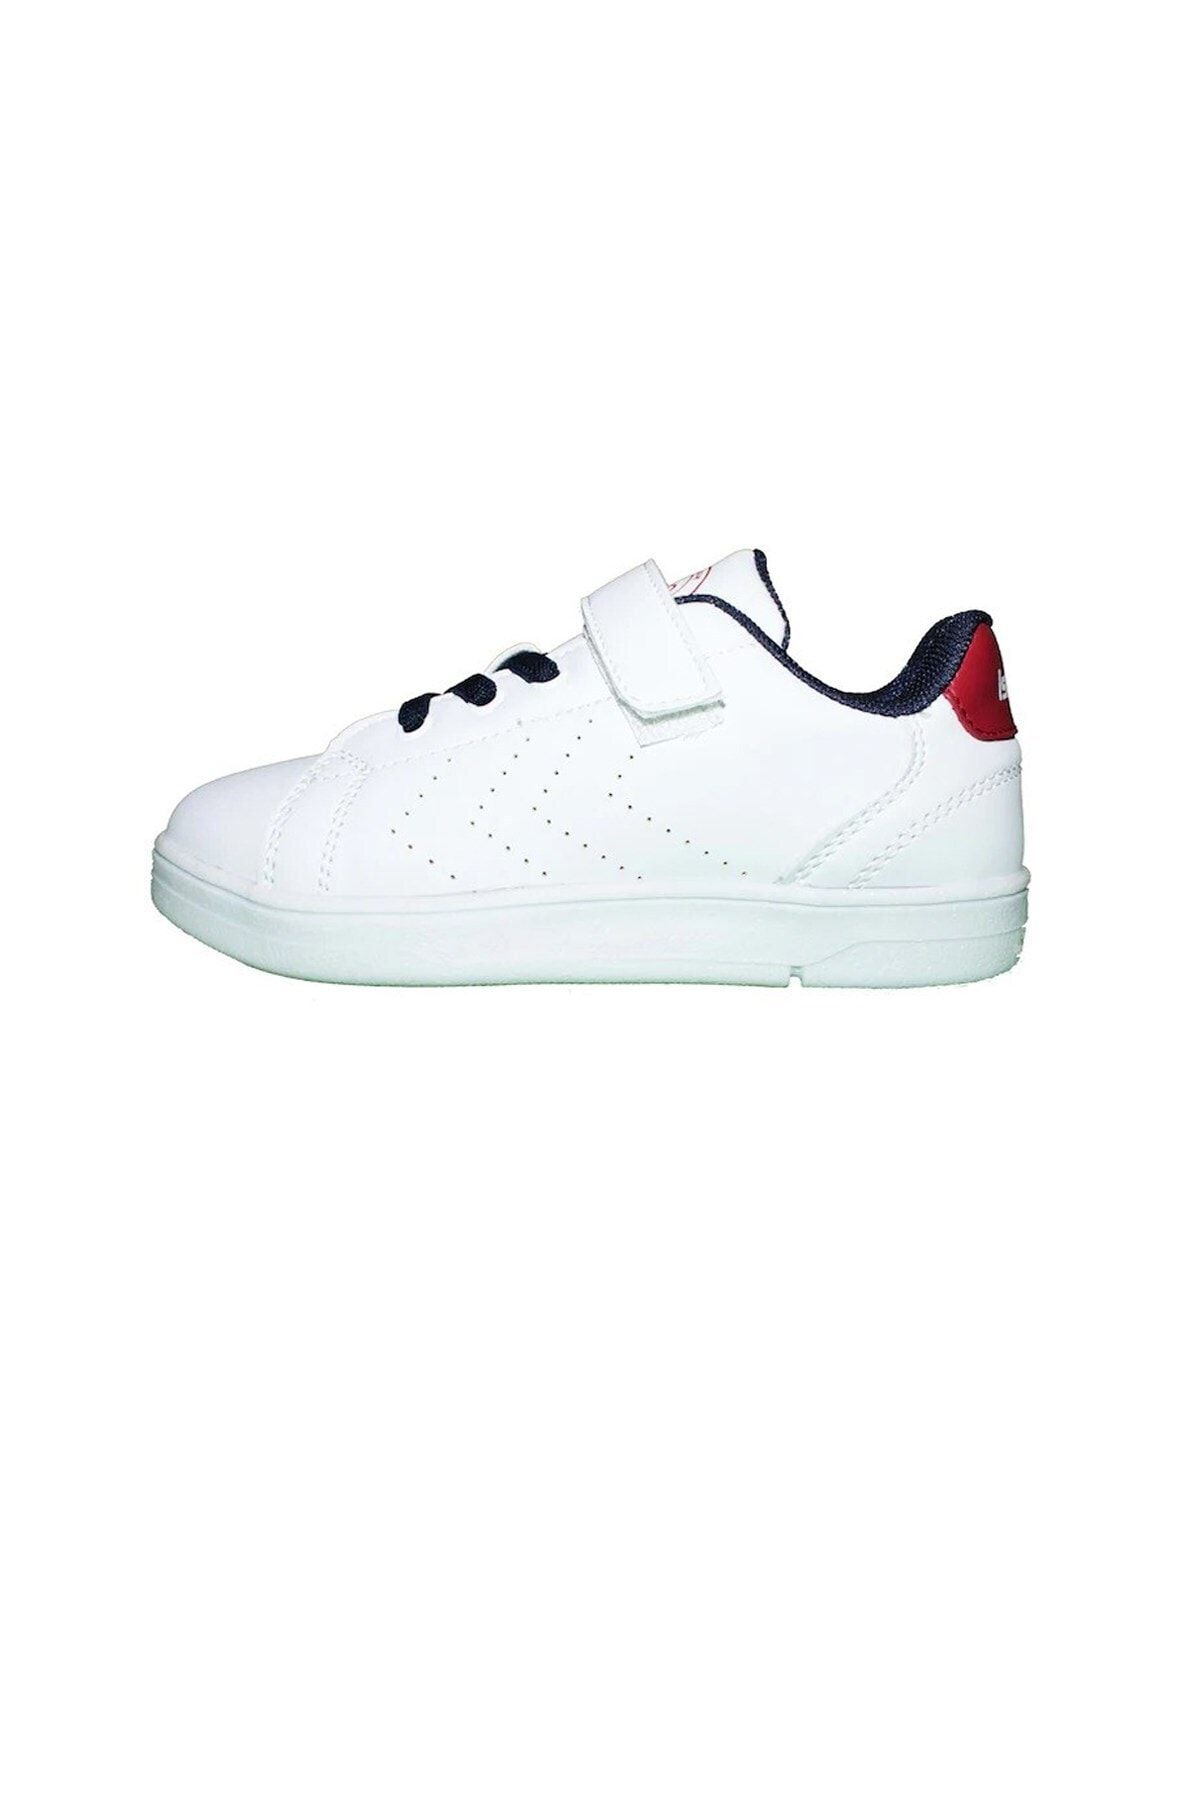 hummel Busan Jr Sneaker Çocuk Ayakkabı 212670-9253